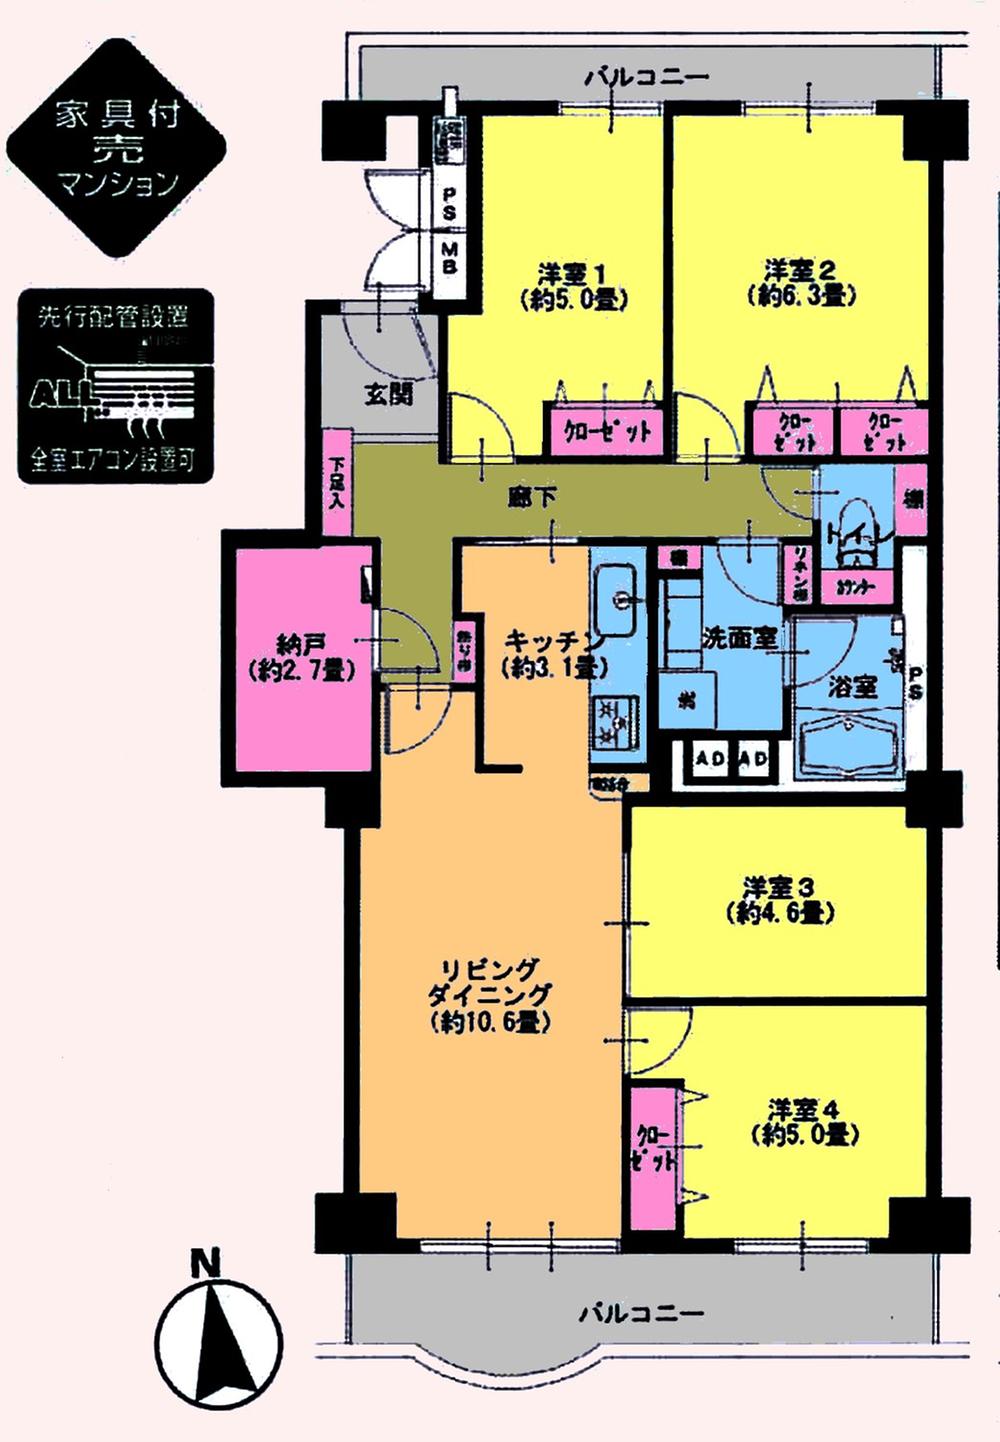 Floor plan. 4LDK + S (storeroom), Price 21,400,000 yen, Occupied area 82.82 sq m , Balcony area 12.05 sq m